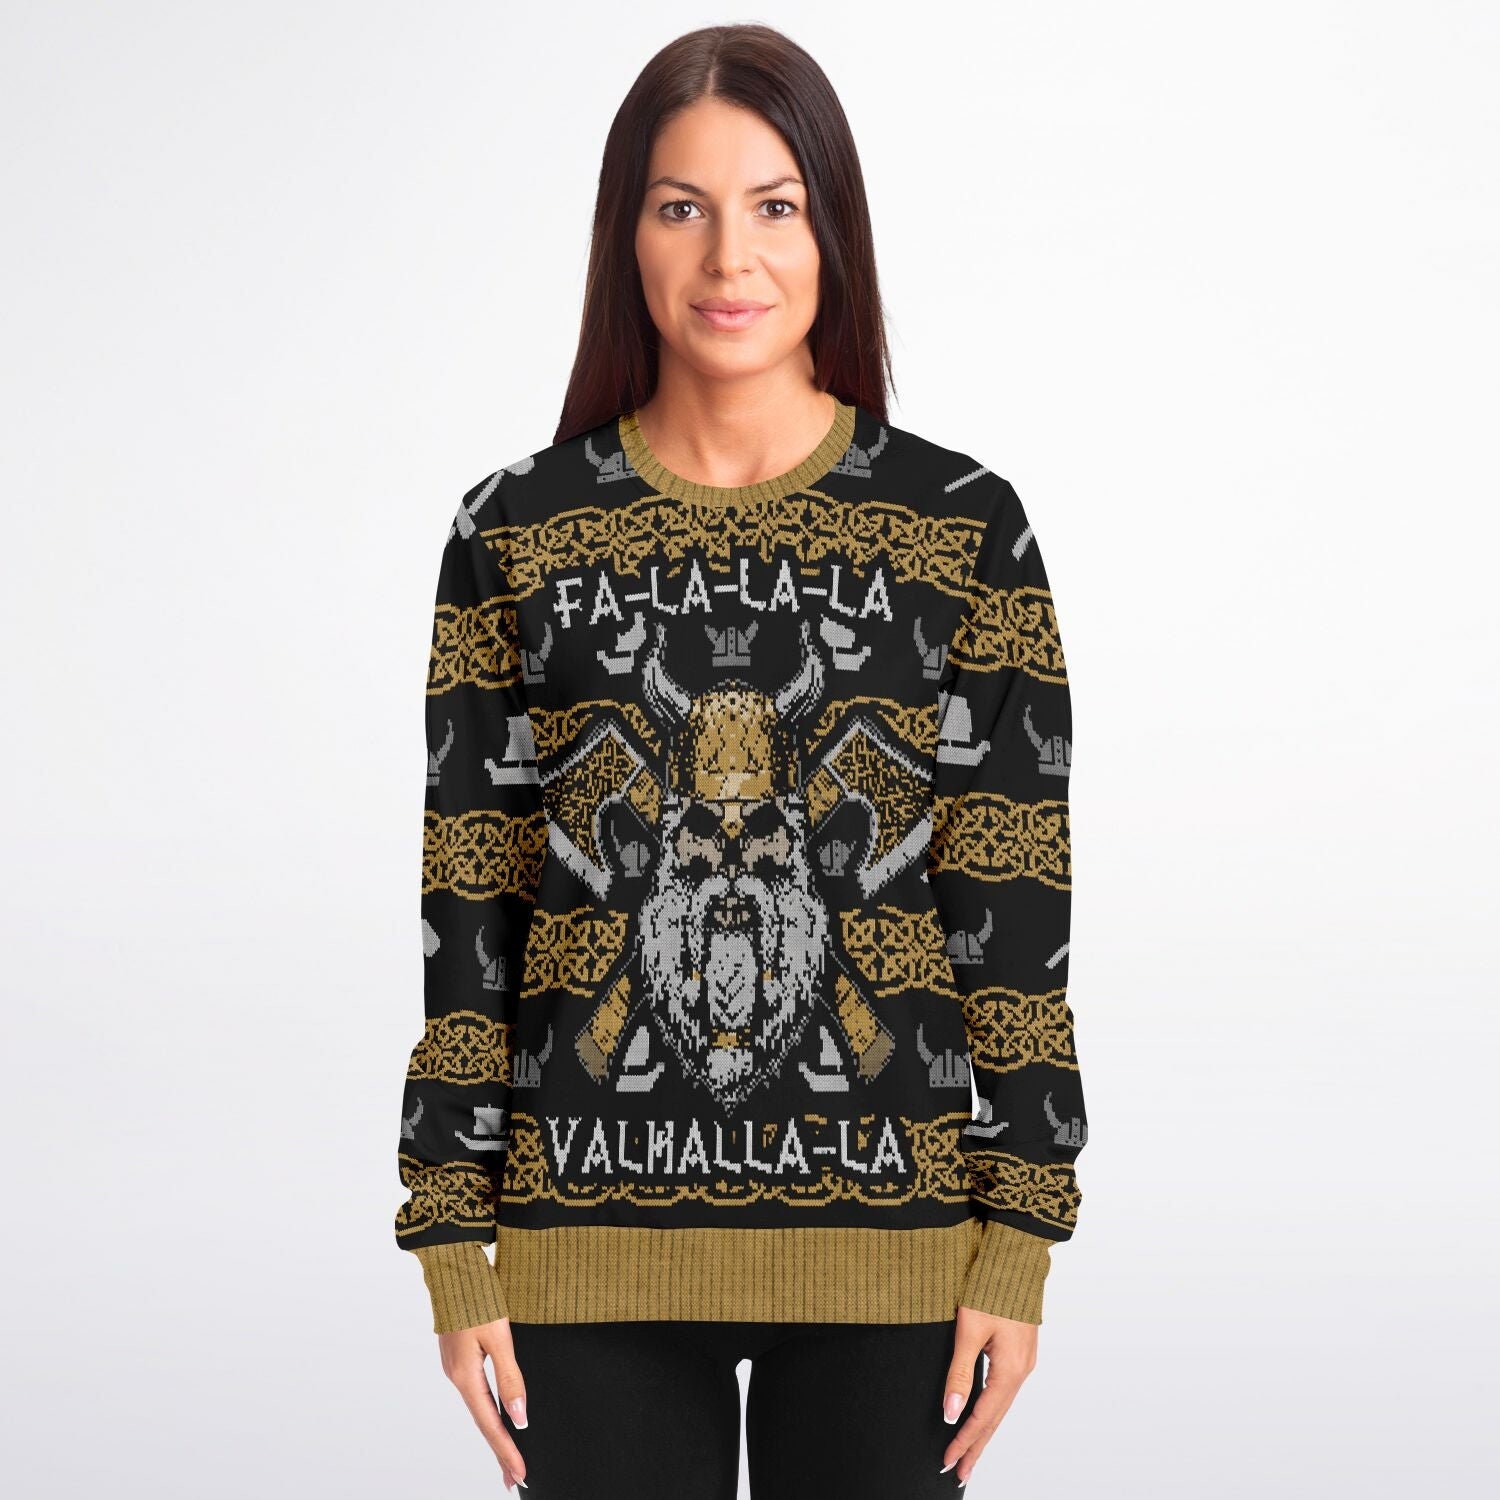 Discover Valhalla Viking - Ugly Christmas Sweatshirt, Printed Xmas Sweatshirt